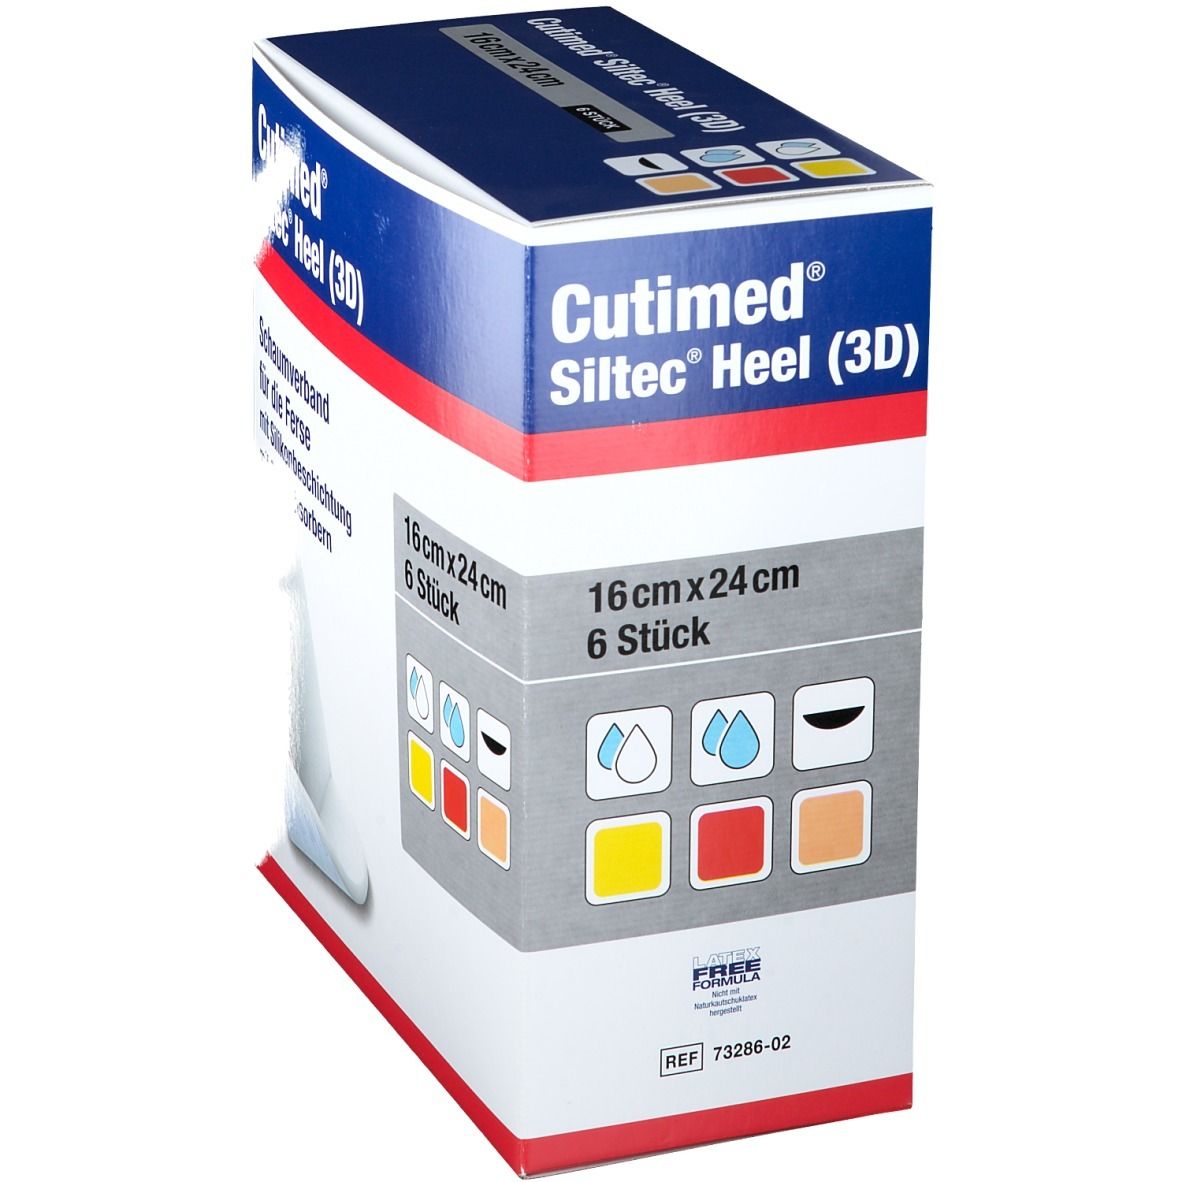 Cutimed® Siltec® Heel 3D 16 cm x 24 cm